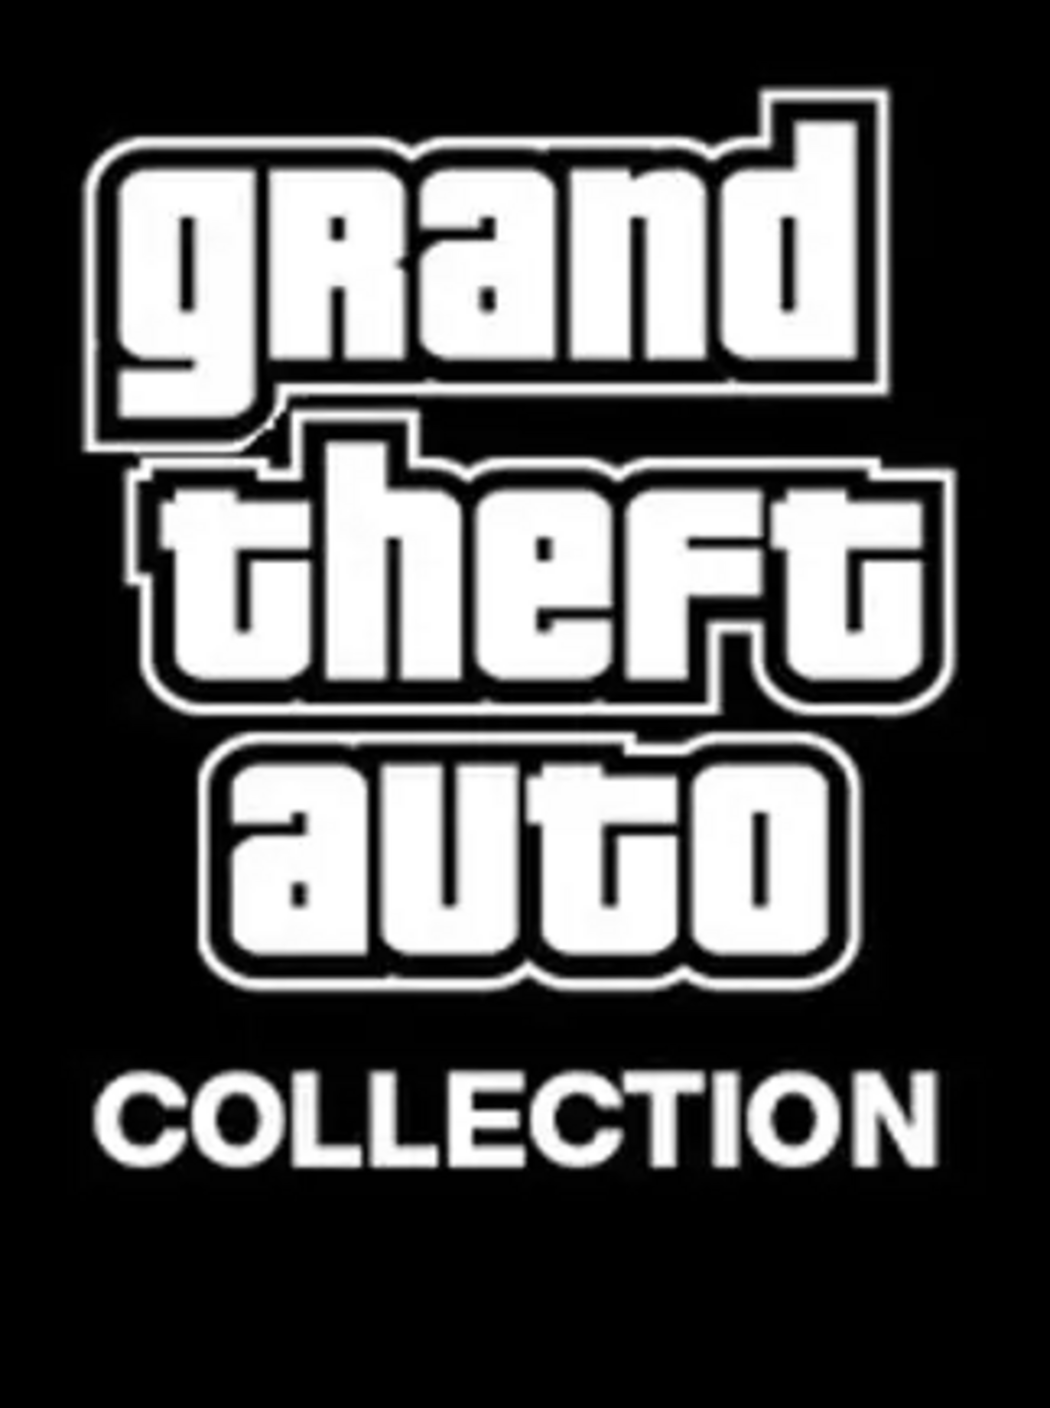 Grand Theft Auto IV PC - Buy Steam Game Key